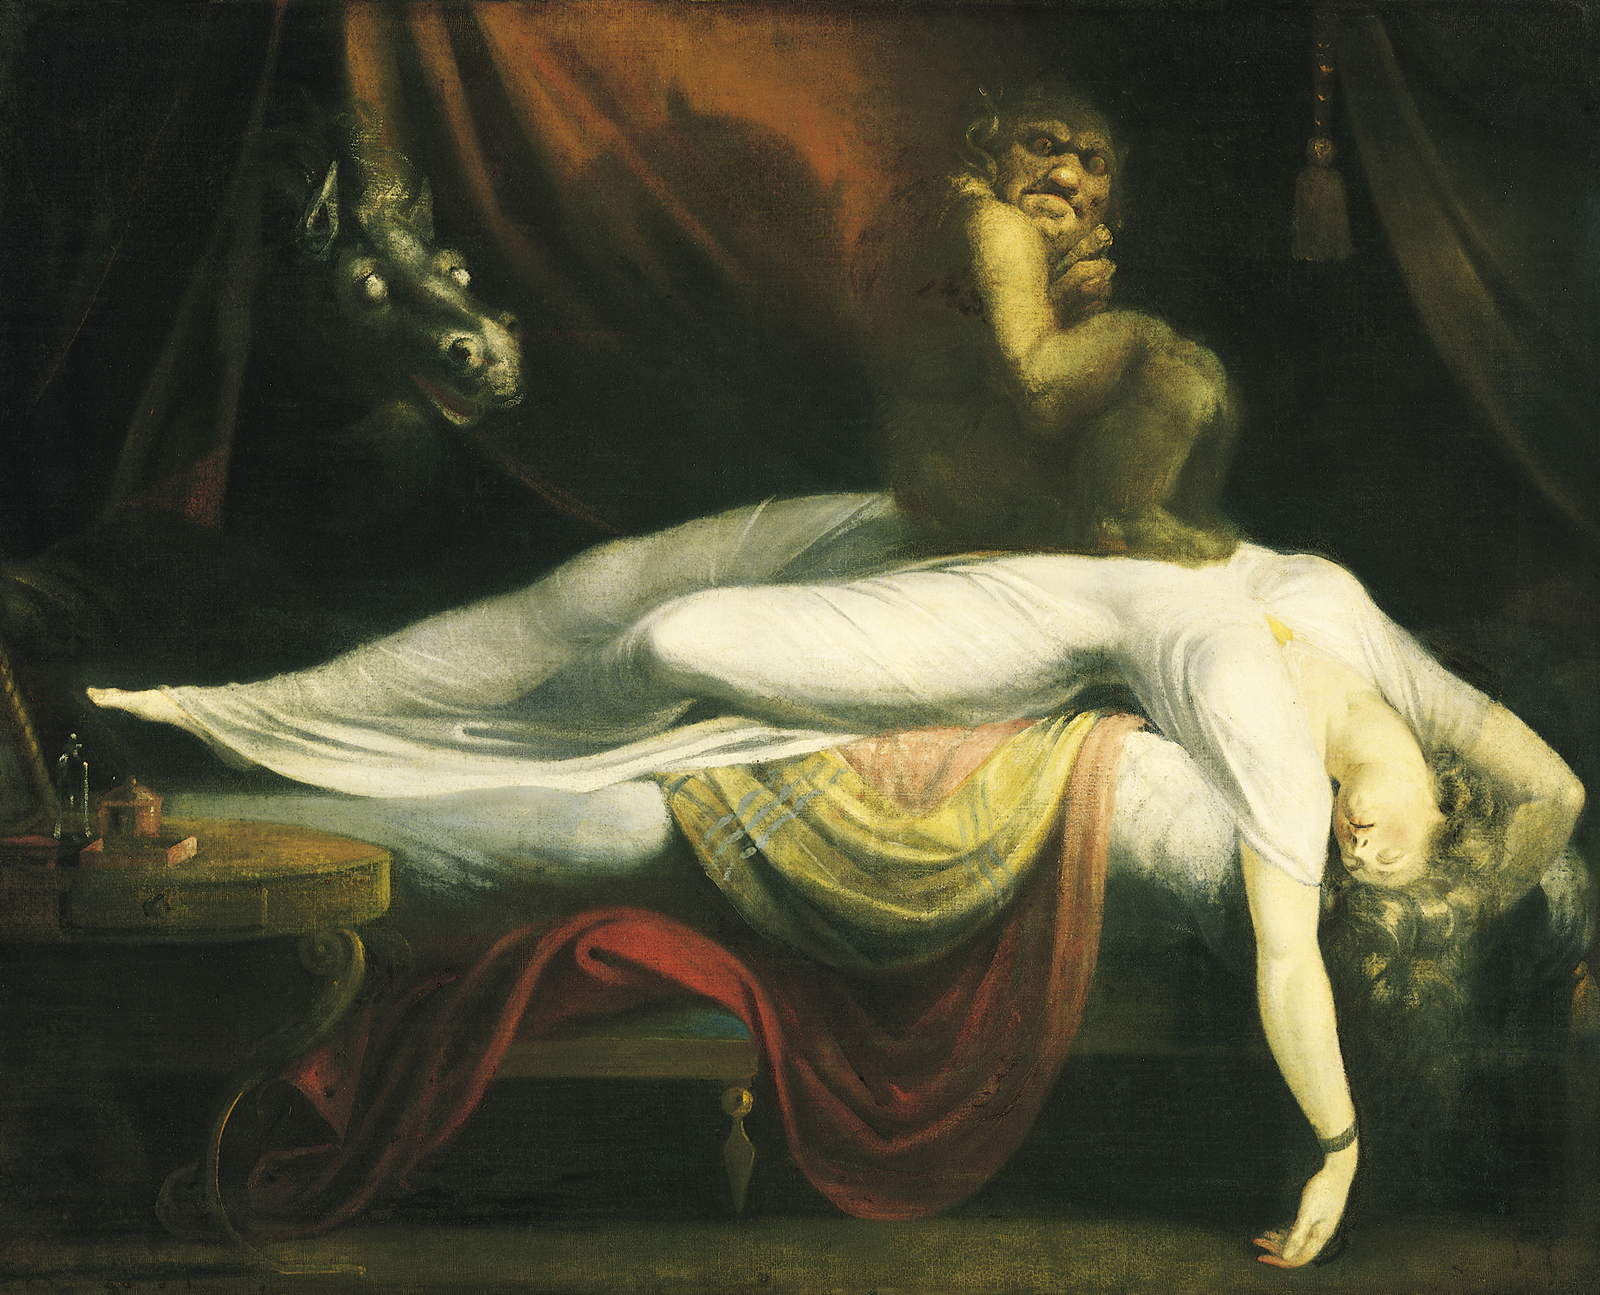 Sleep paralysis demon